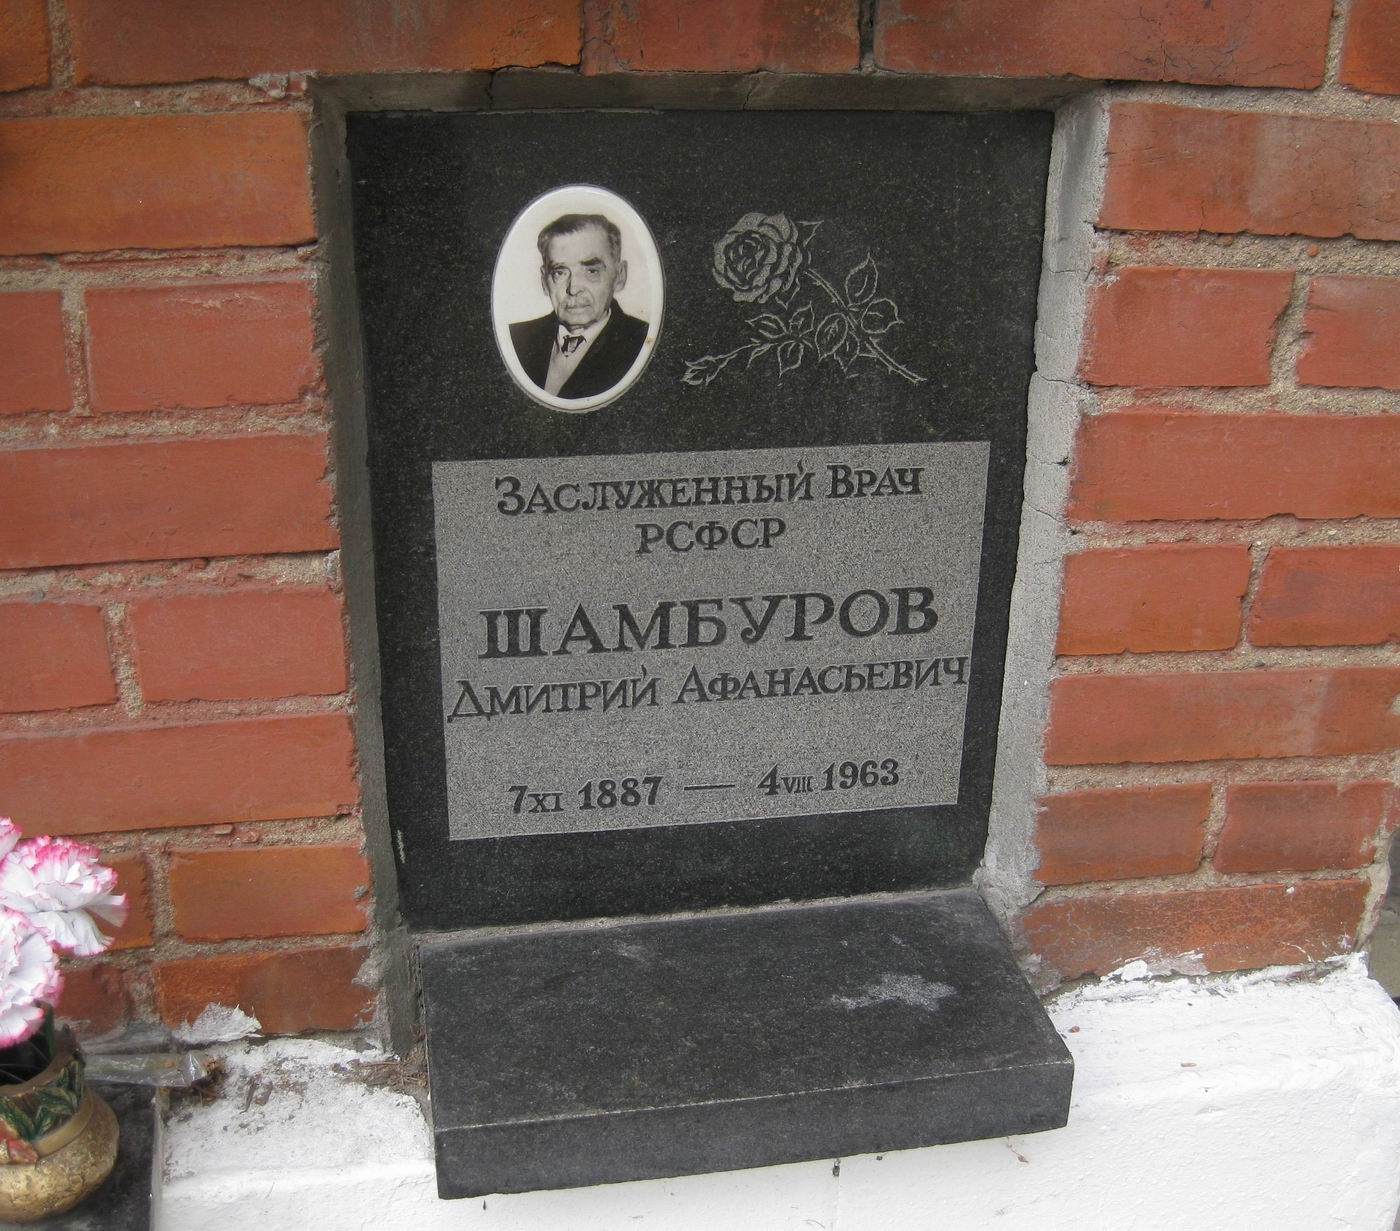 Плита на нише Шамбурова Д.А. (1887-1963), на Новодевичьем кладбище (колумбарий [125]-27-4).